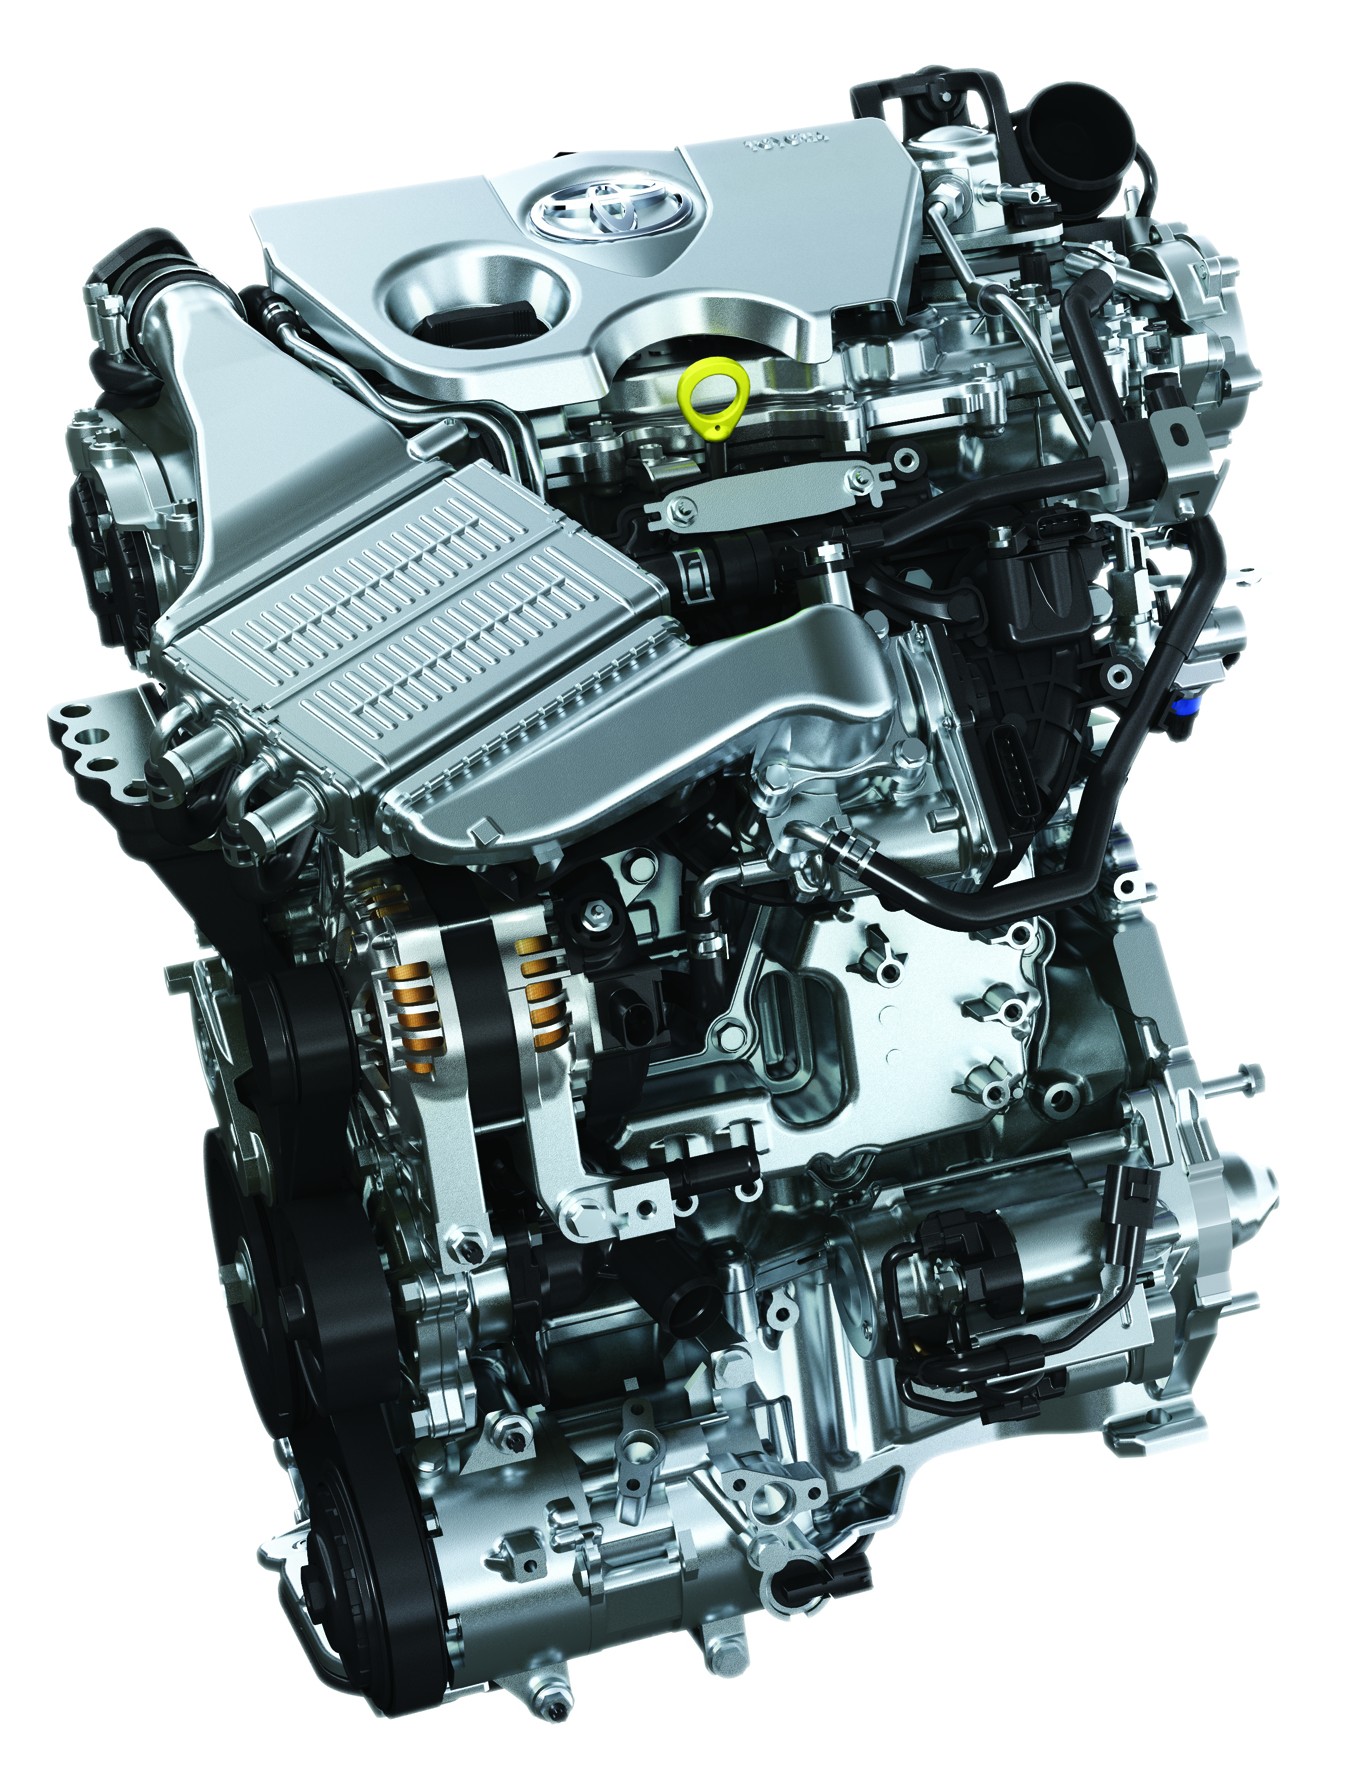 Toyota Auris facelift gets new 1.2 litre turbo engine 1.2T